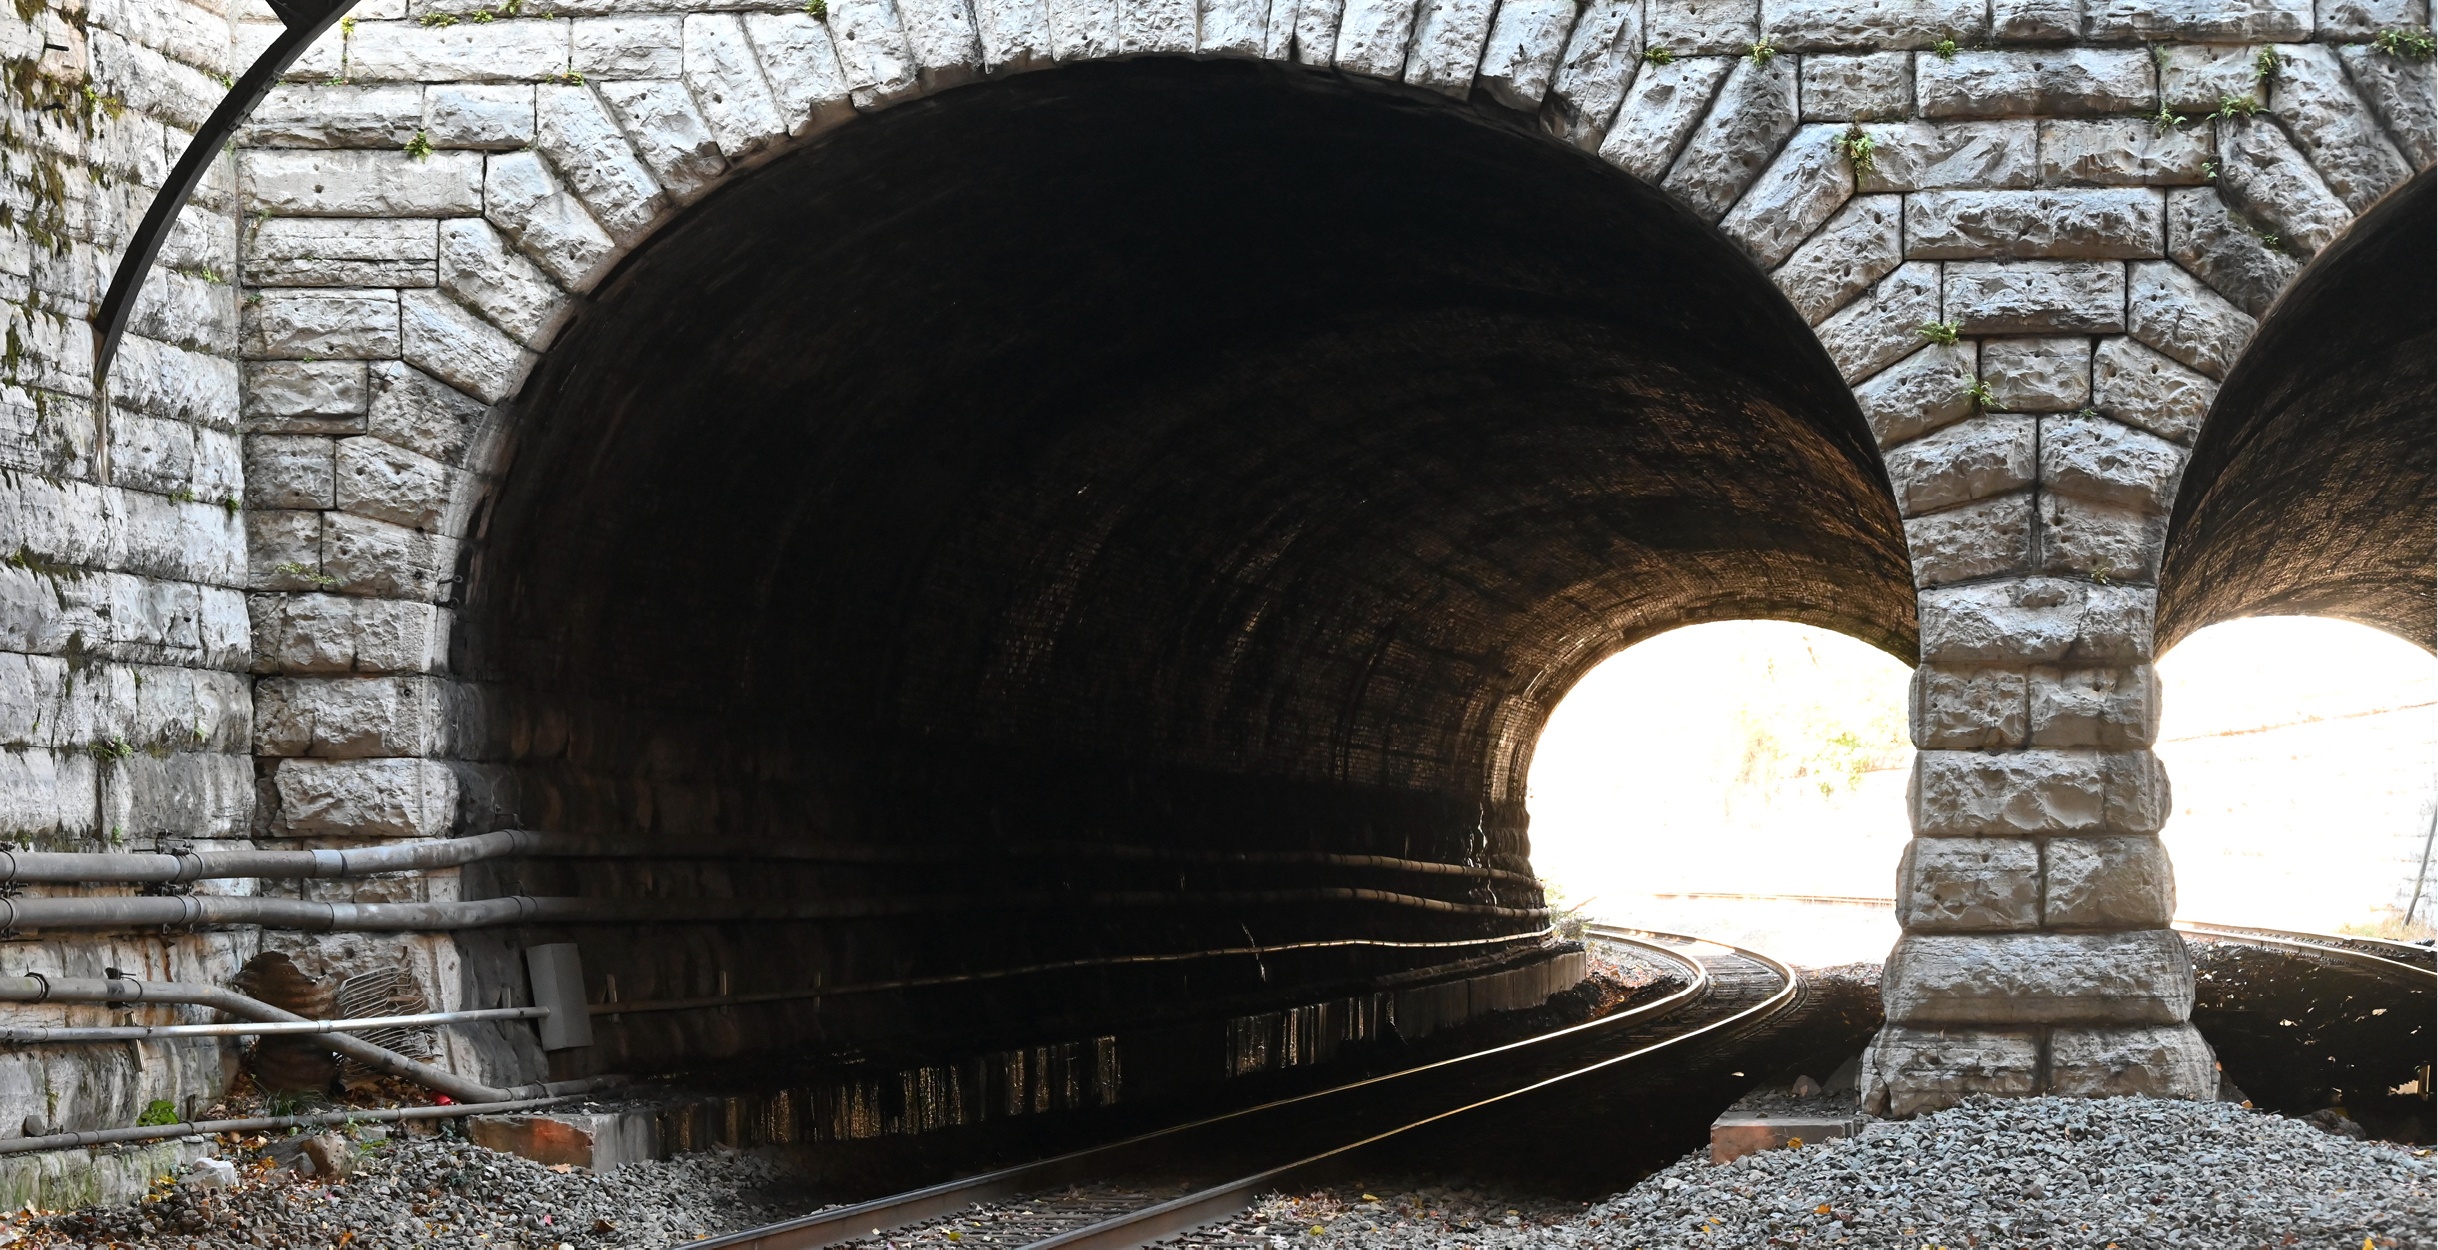 Howard Street Tunnel